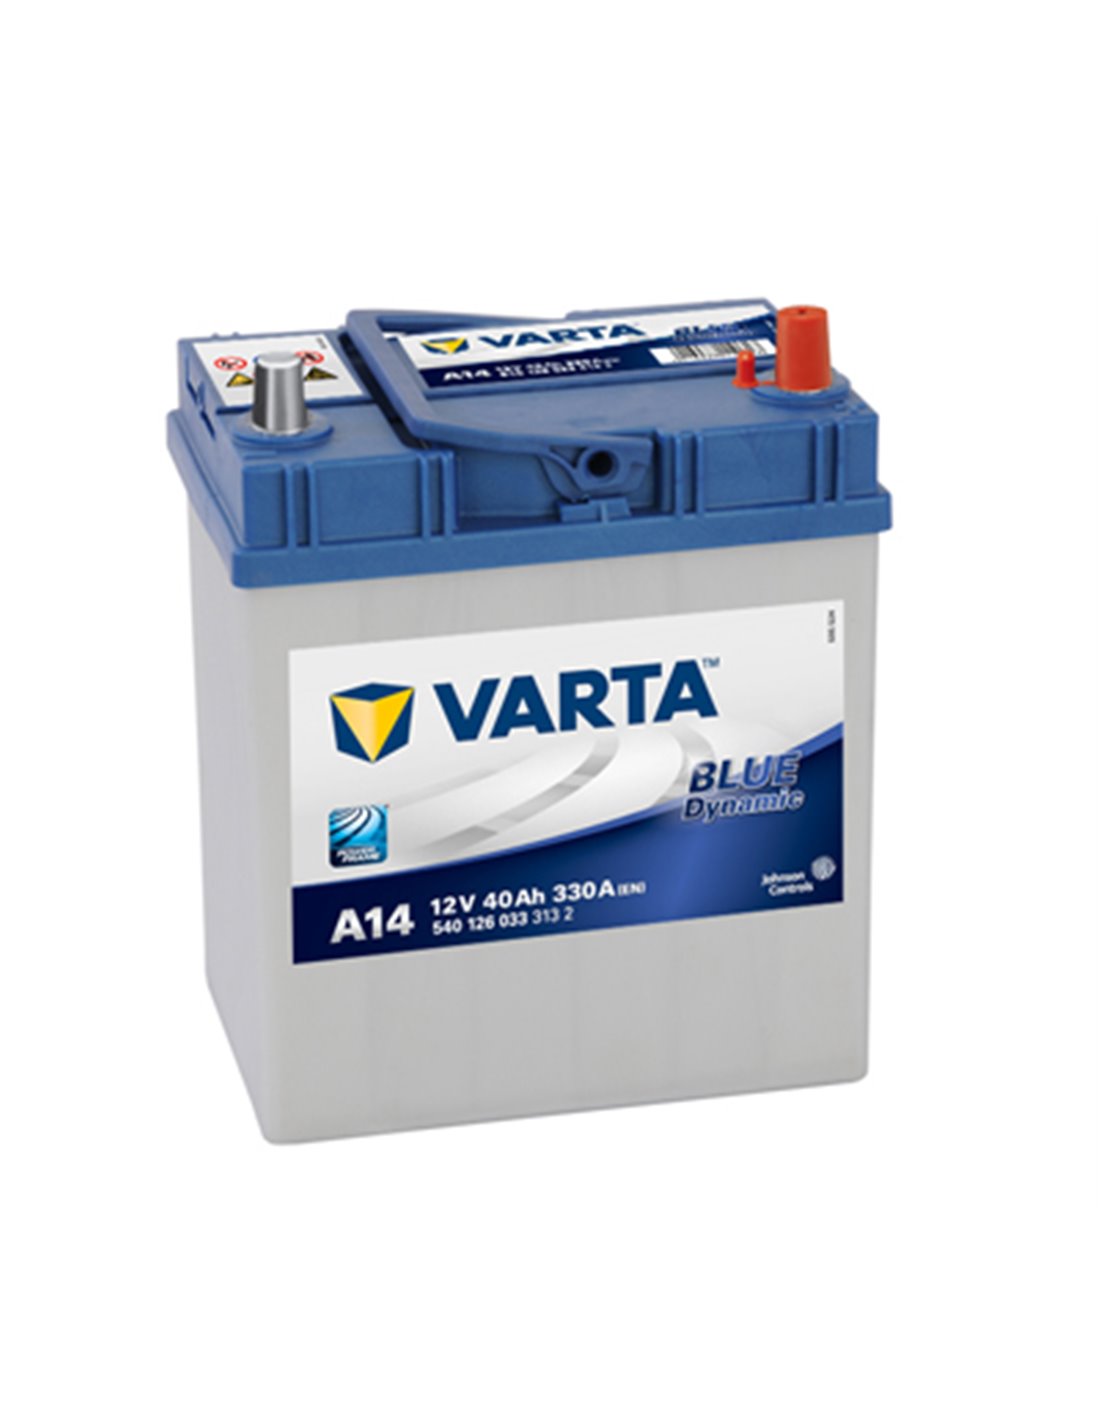 VARTA Blue Dynamic 12V 40Ah 330A – Borna Normala (dreapta +) Baterii Auto